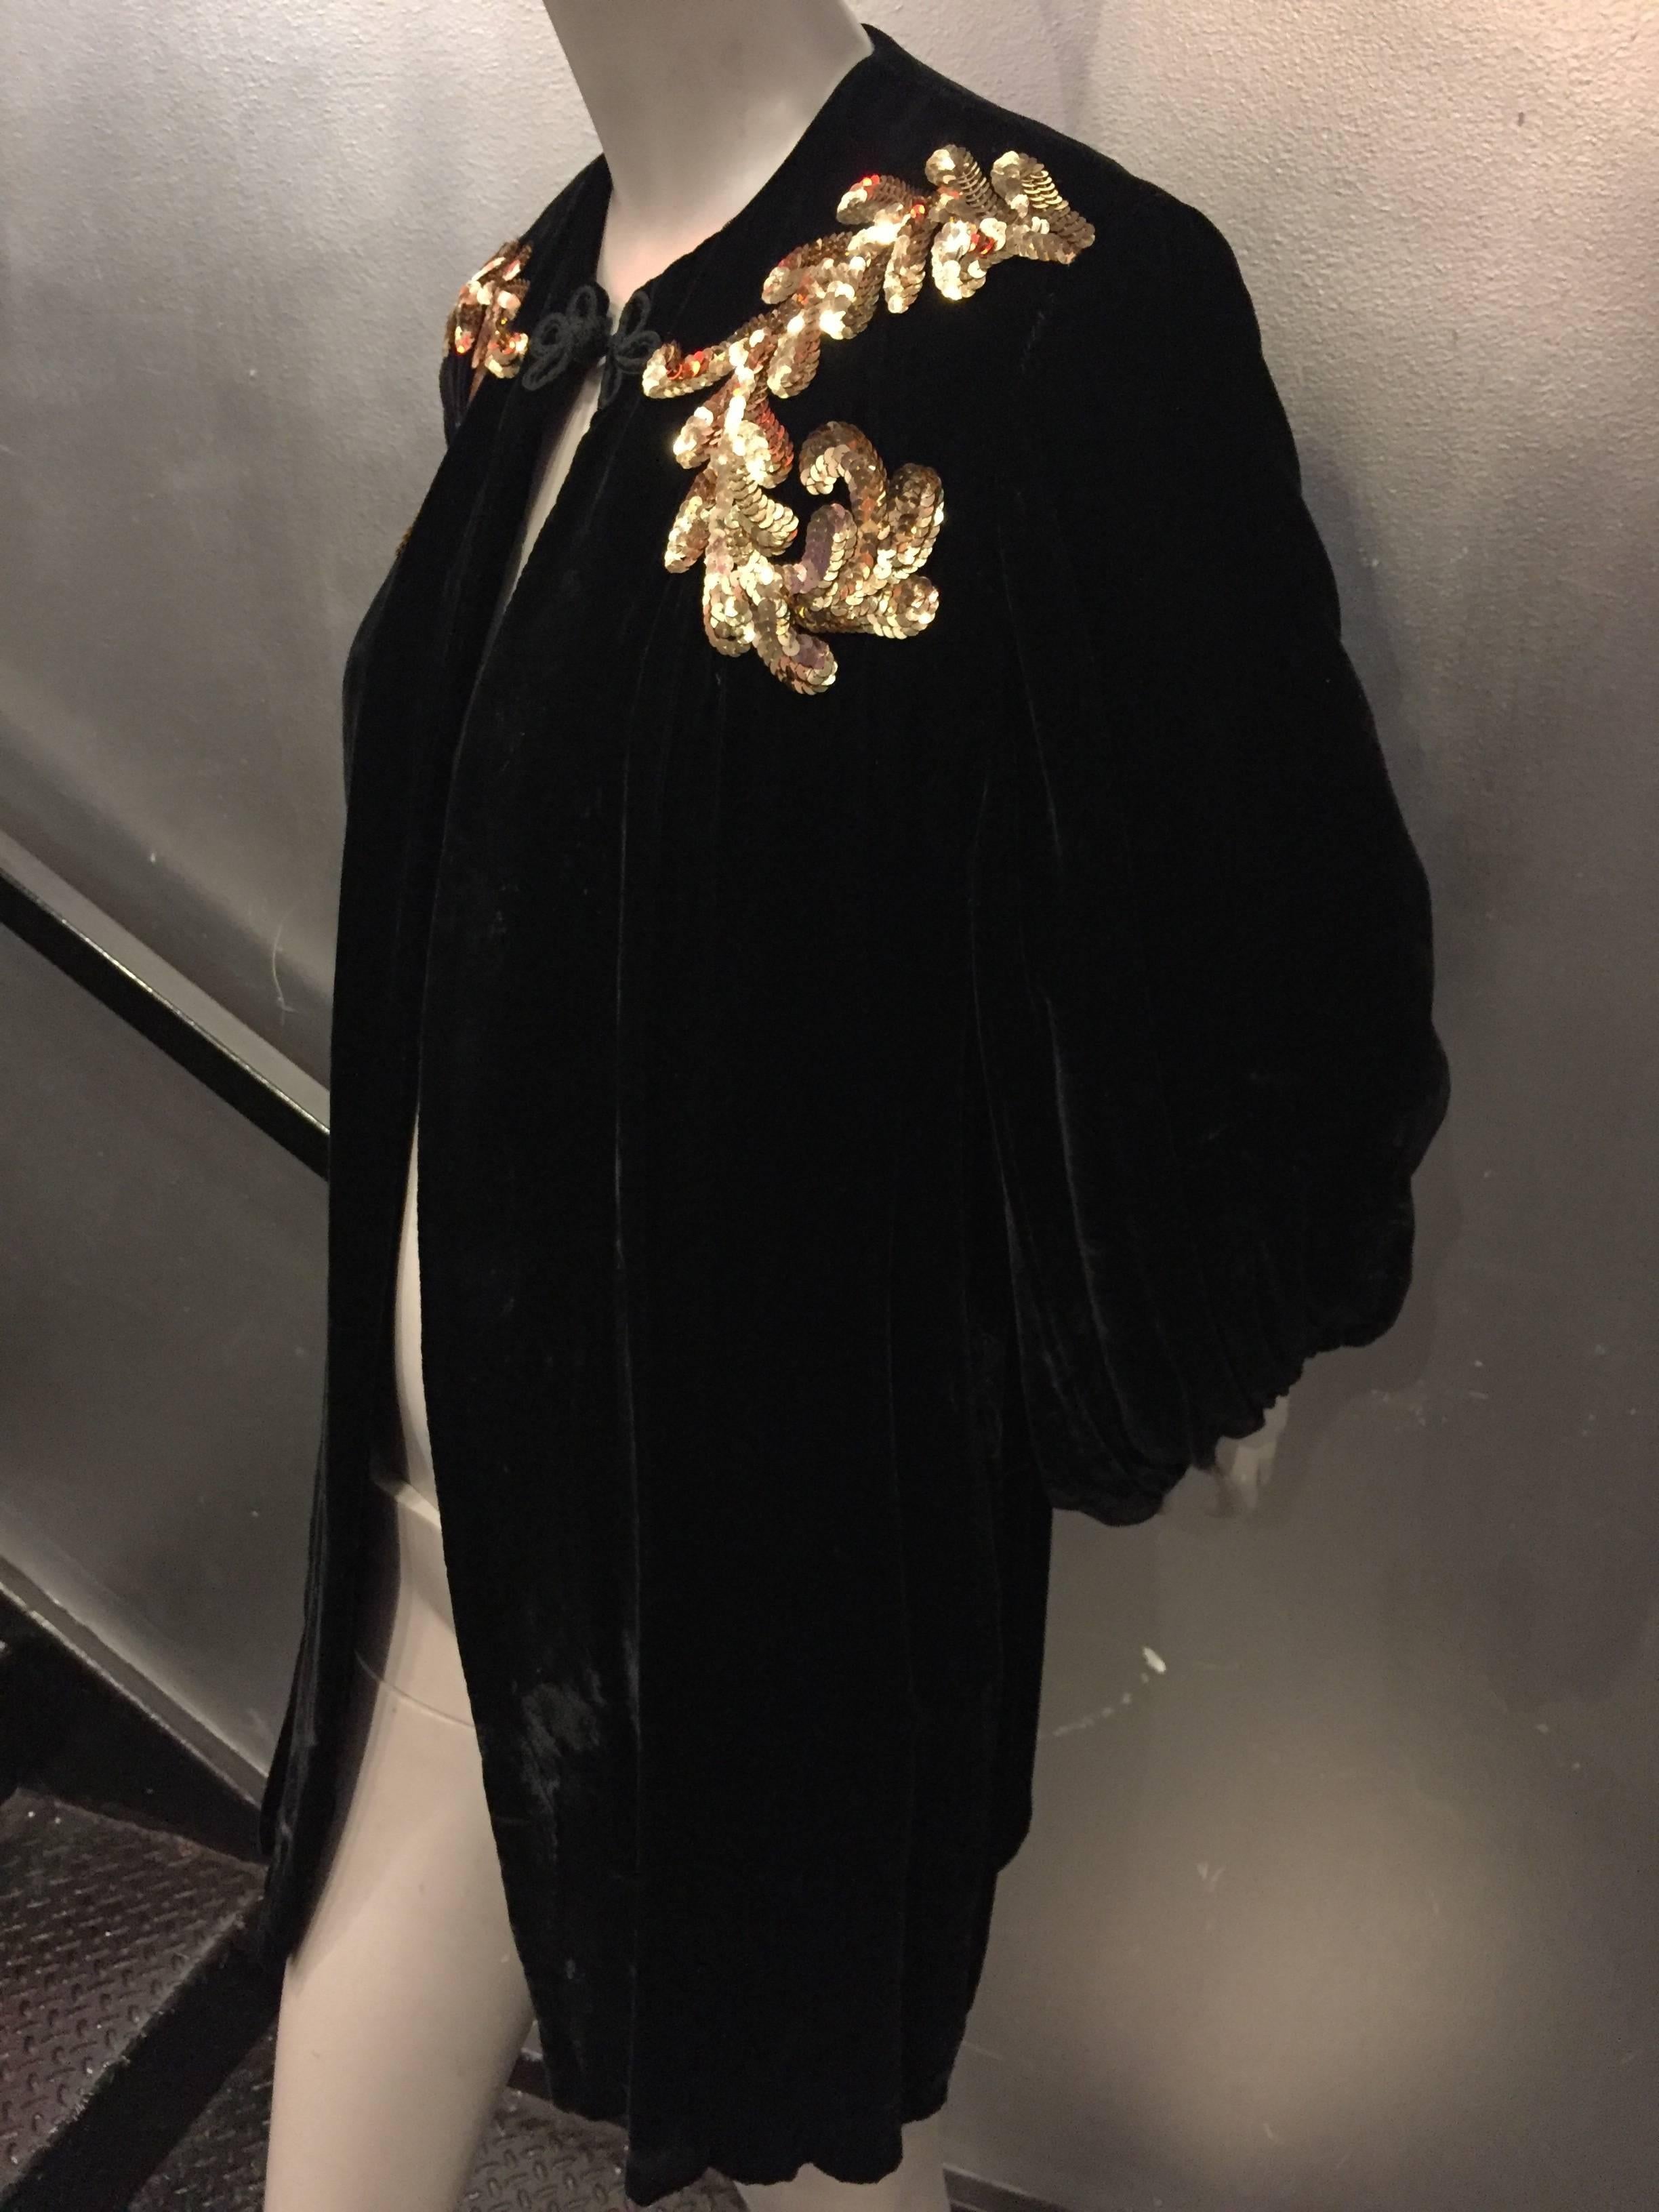 Women's 1940s Black Velvet Evening Coat with Gold Sequin Leaf Appliqué